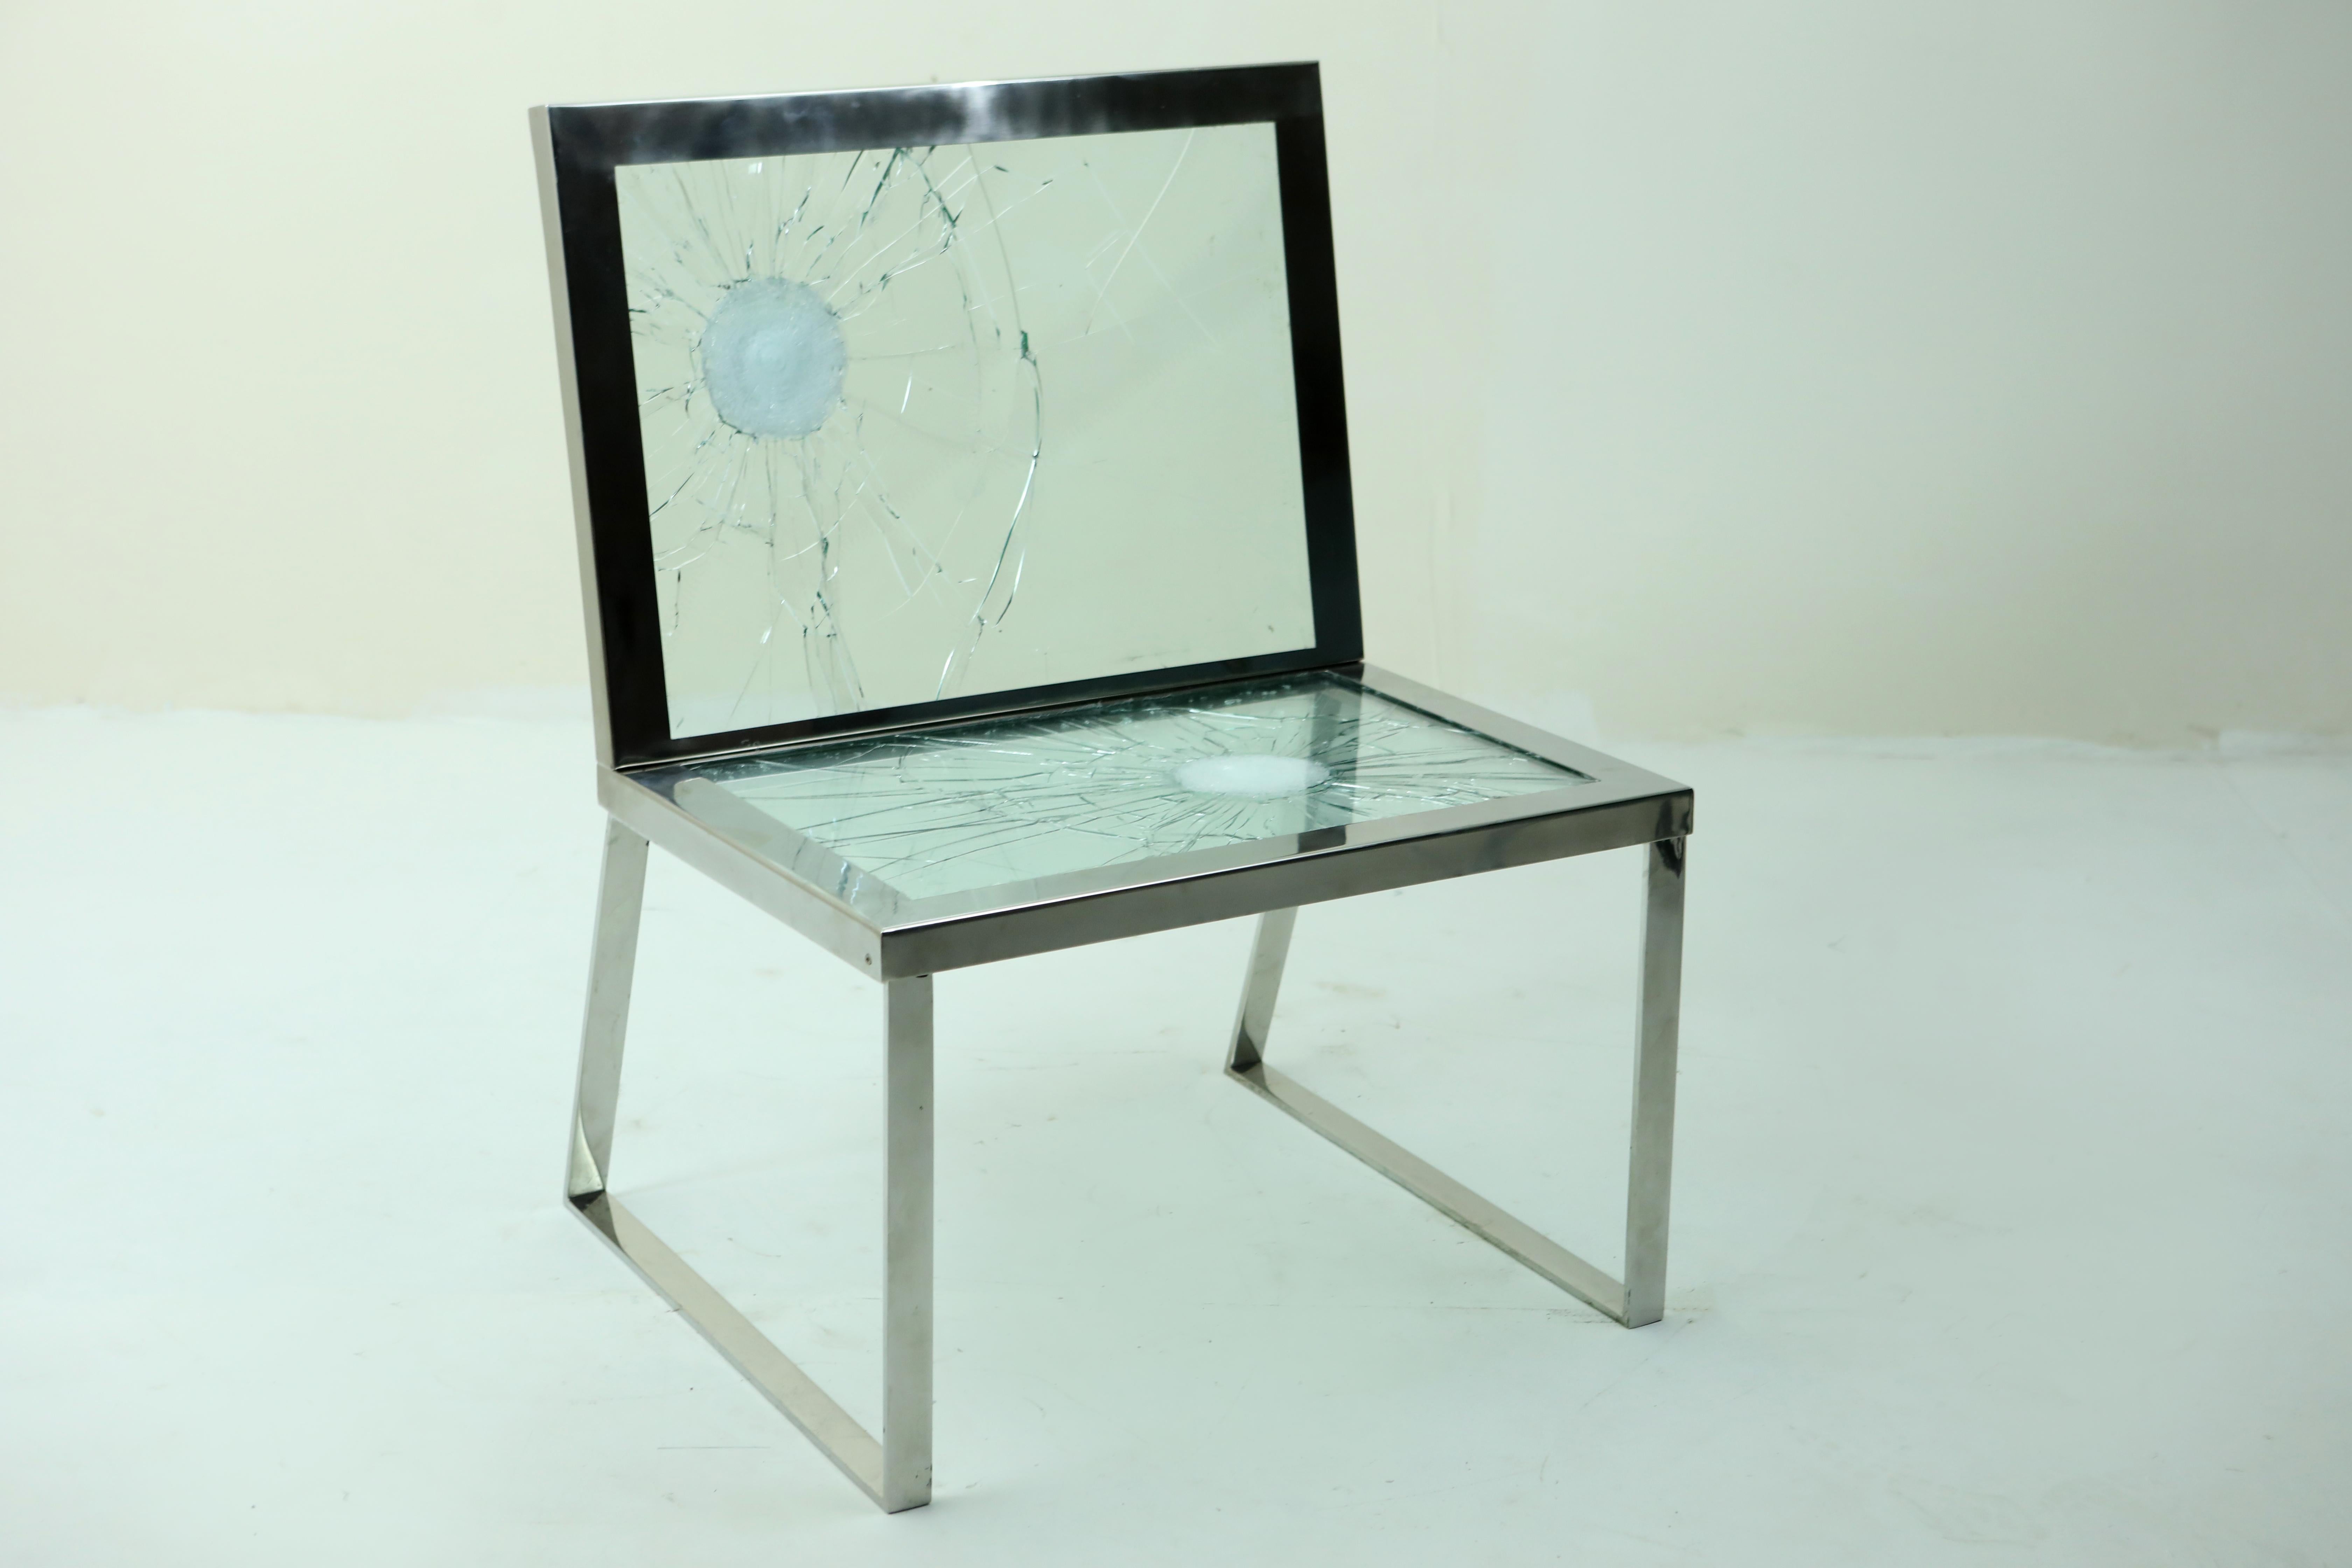 Glass One of a kind Contemporary Bullet Chair by artist Alê Jordão, Brazil 2010 For Sale